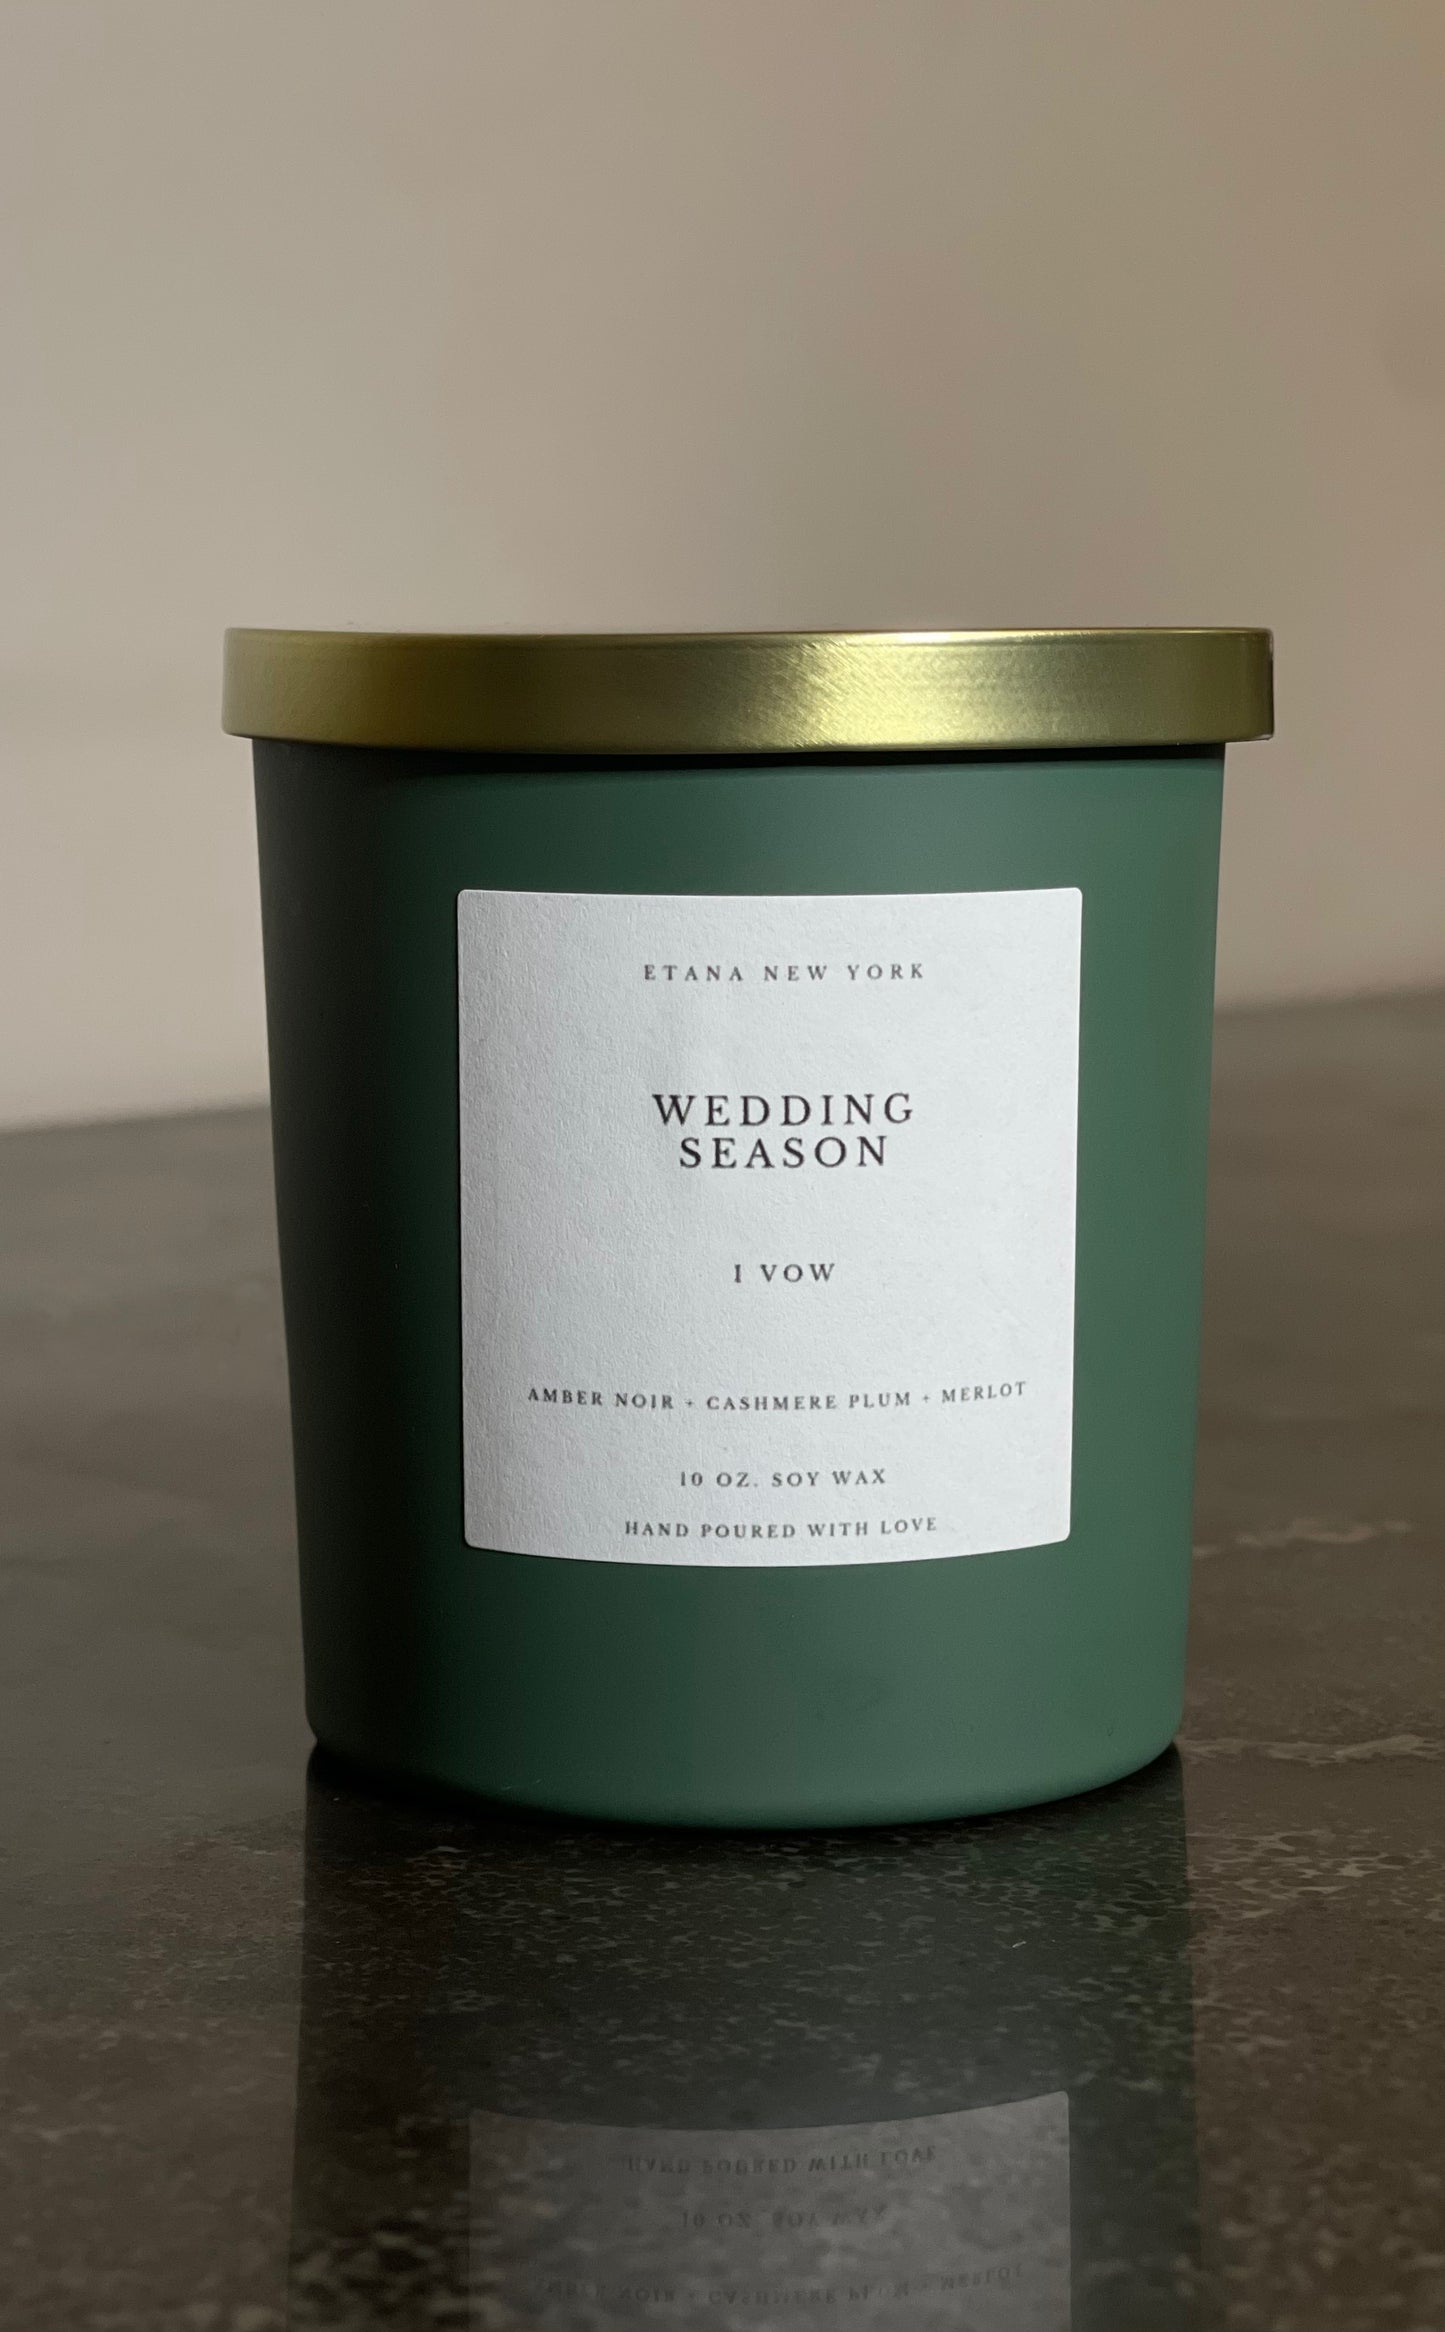 Wedding Season - I Vow 10oz. Candle